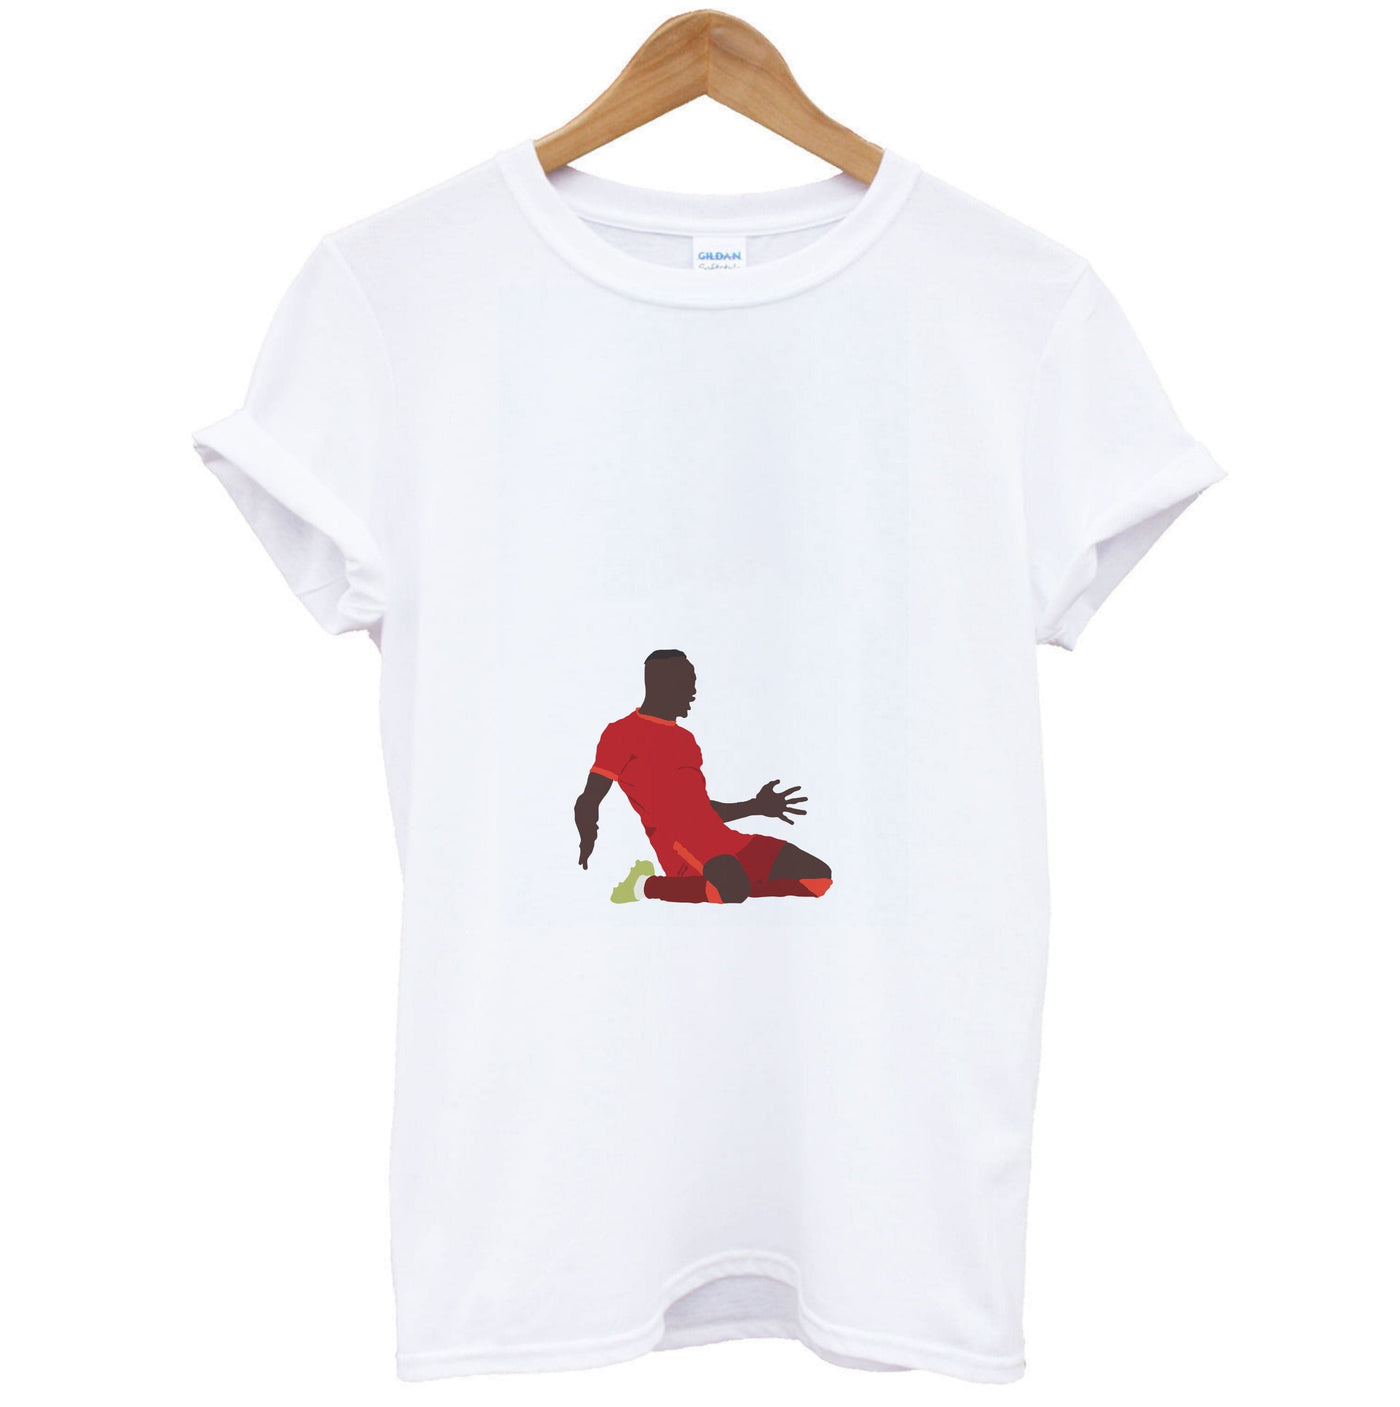 Sadio Mane - Football T-Shirt